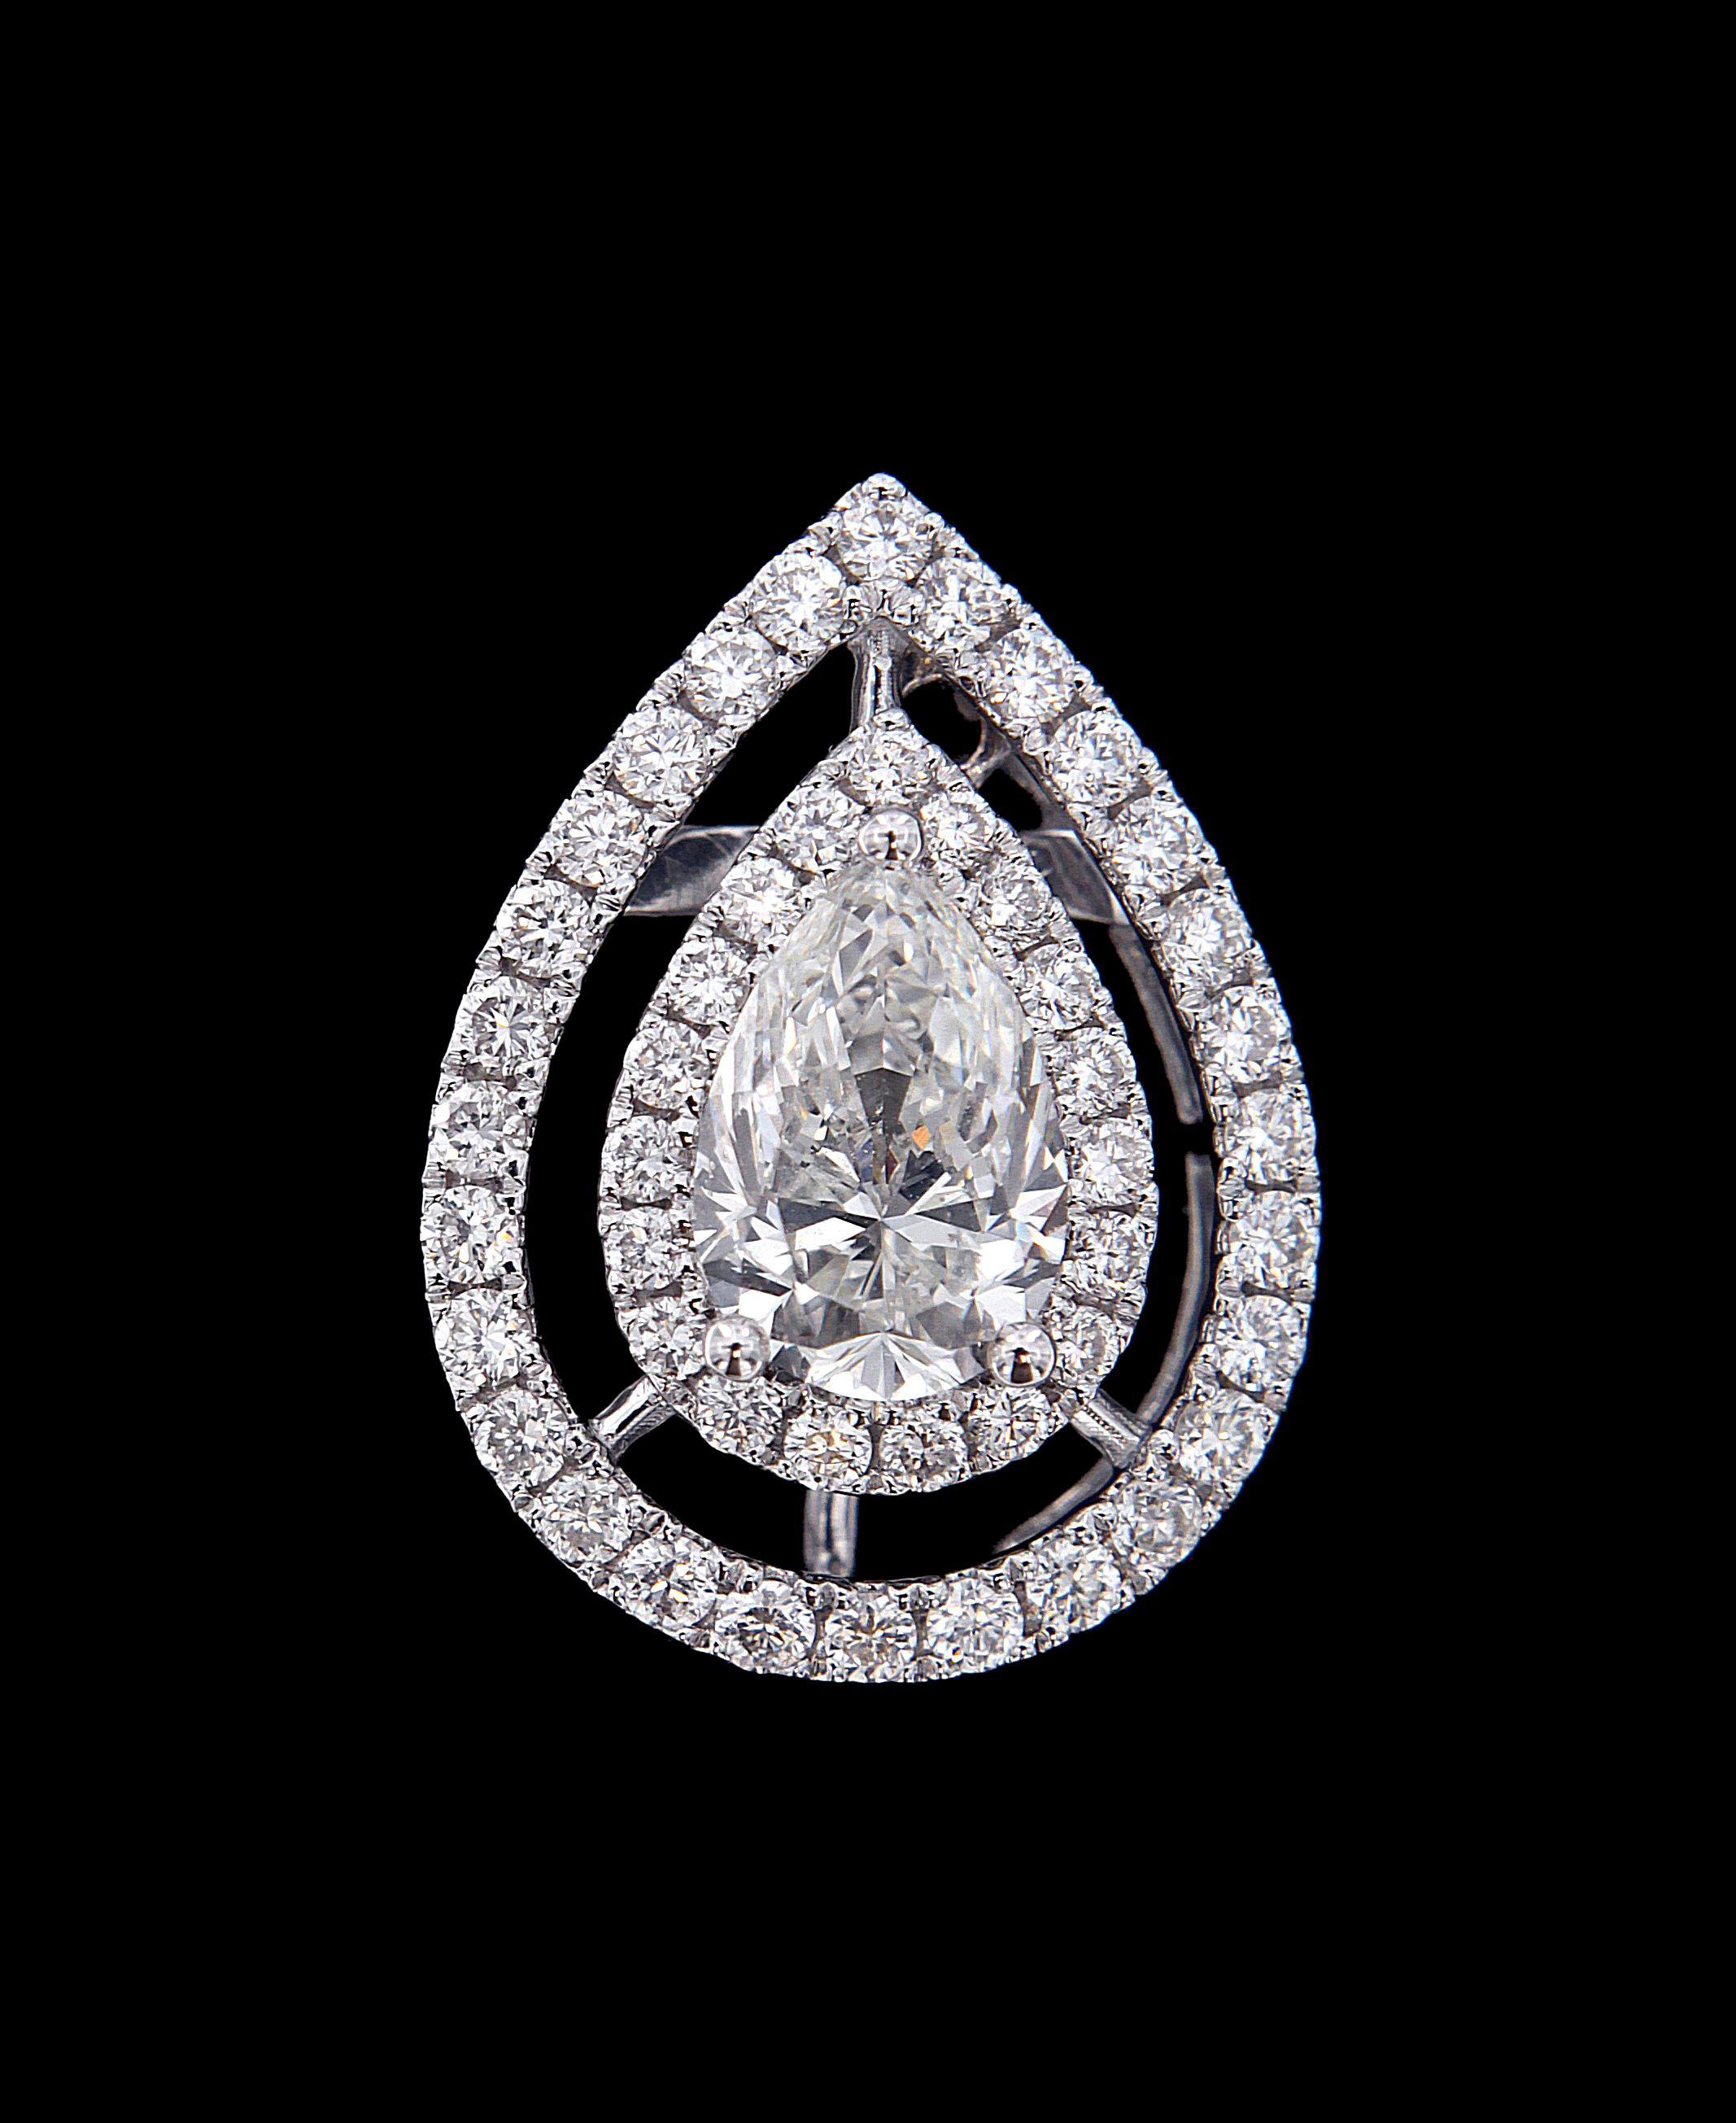 Stylish 18 Karat White Gold And Diamond Ring And Earring Set .
Pendants:
Diamonds of approximately 0.782 carats mounted on 18 karat white gold pendants. The pendant weighs approximately around 2.224 grams.
Earrings:
Diamonds of approximately 2.140